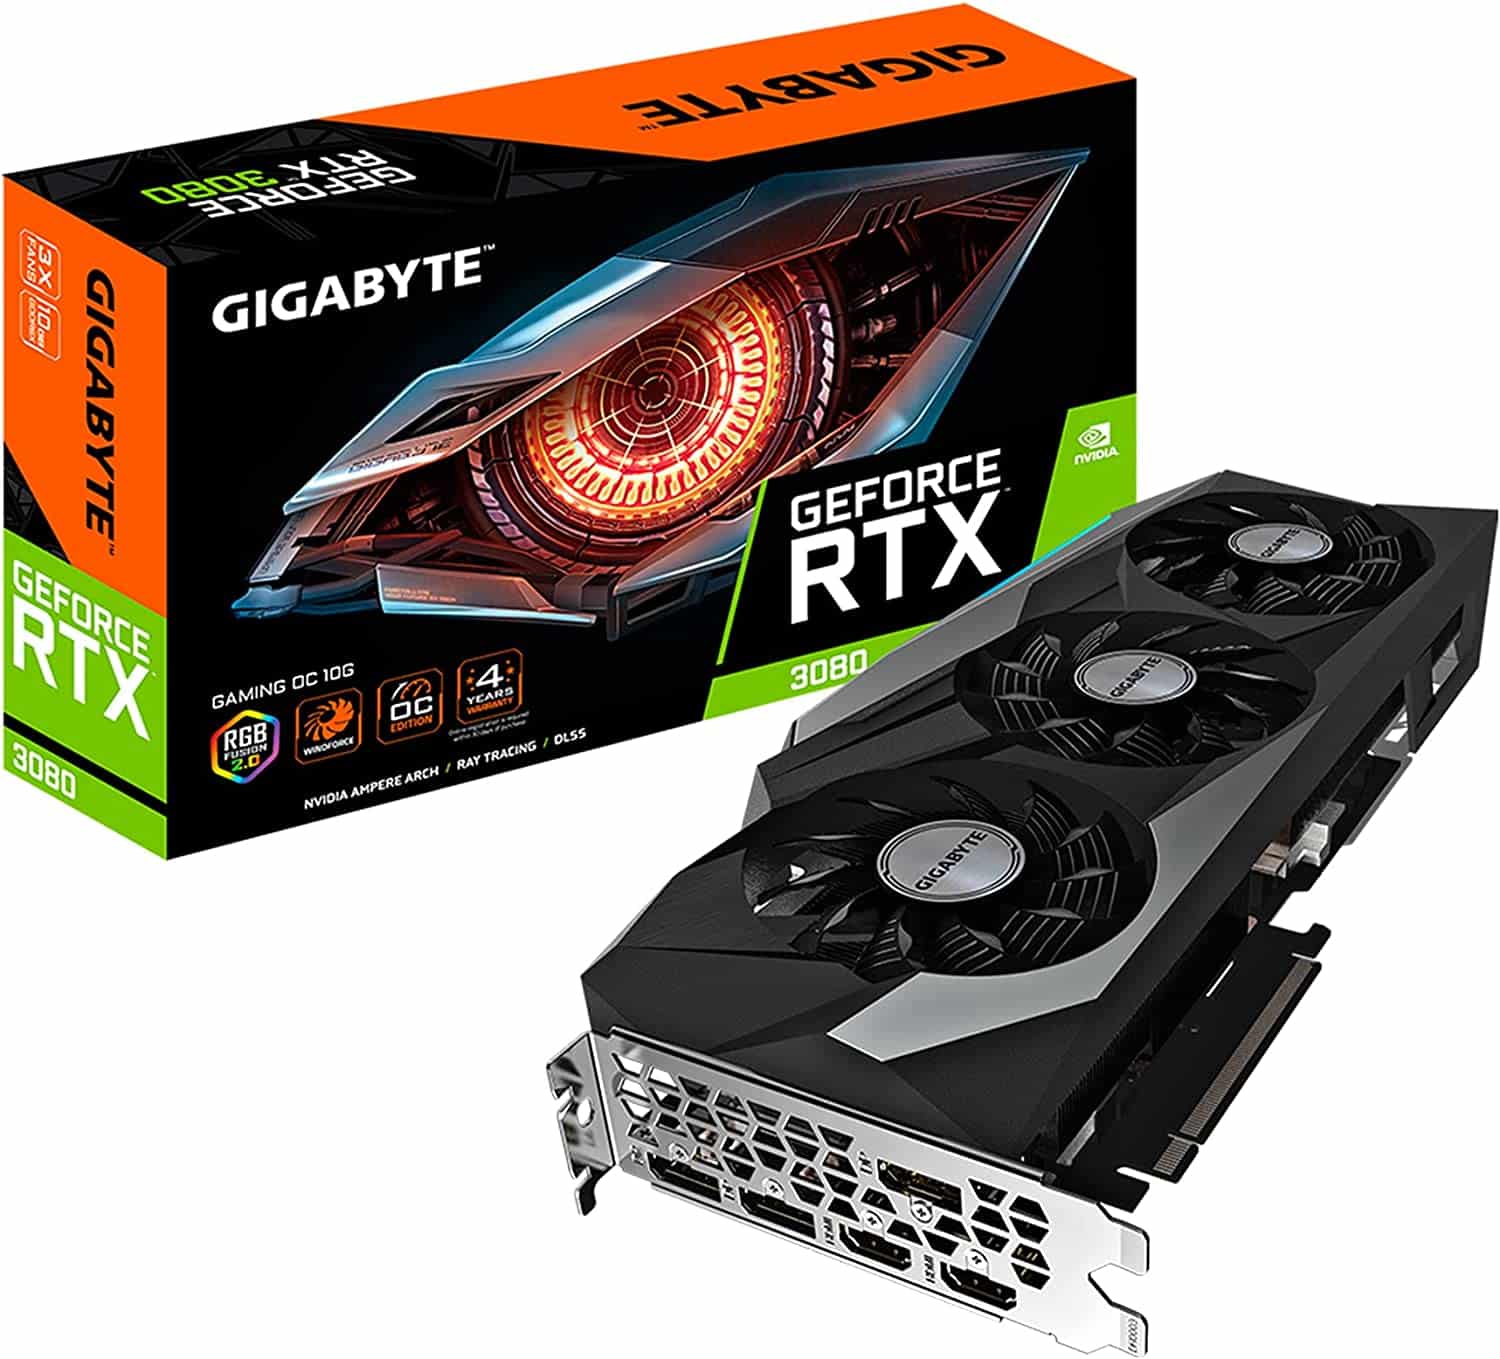 GIGABYTE GeForce RTX 3080 Gaming OC 10G (REV2.0) Graphics Card, 3X WINDFORCE Fans, LHR, 10GB 320-bit GDDR6X, GV-N3080GAMING OC-10GD REV2.0 Video Card